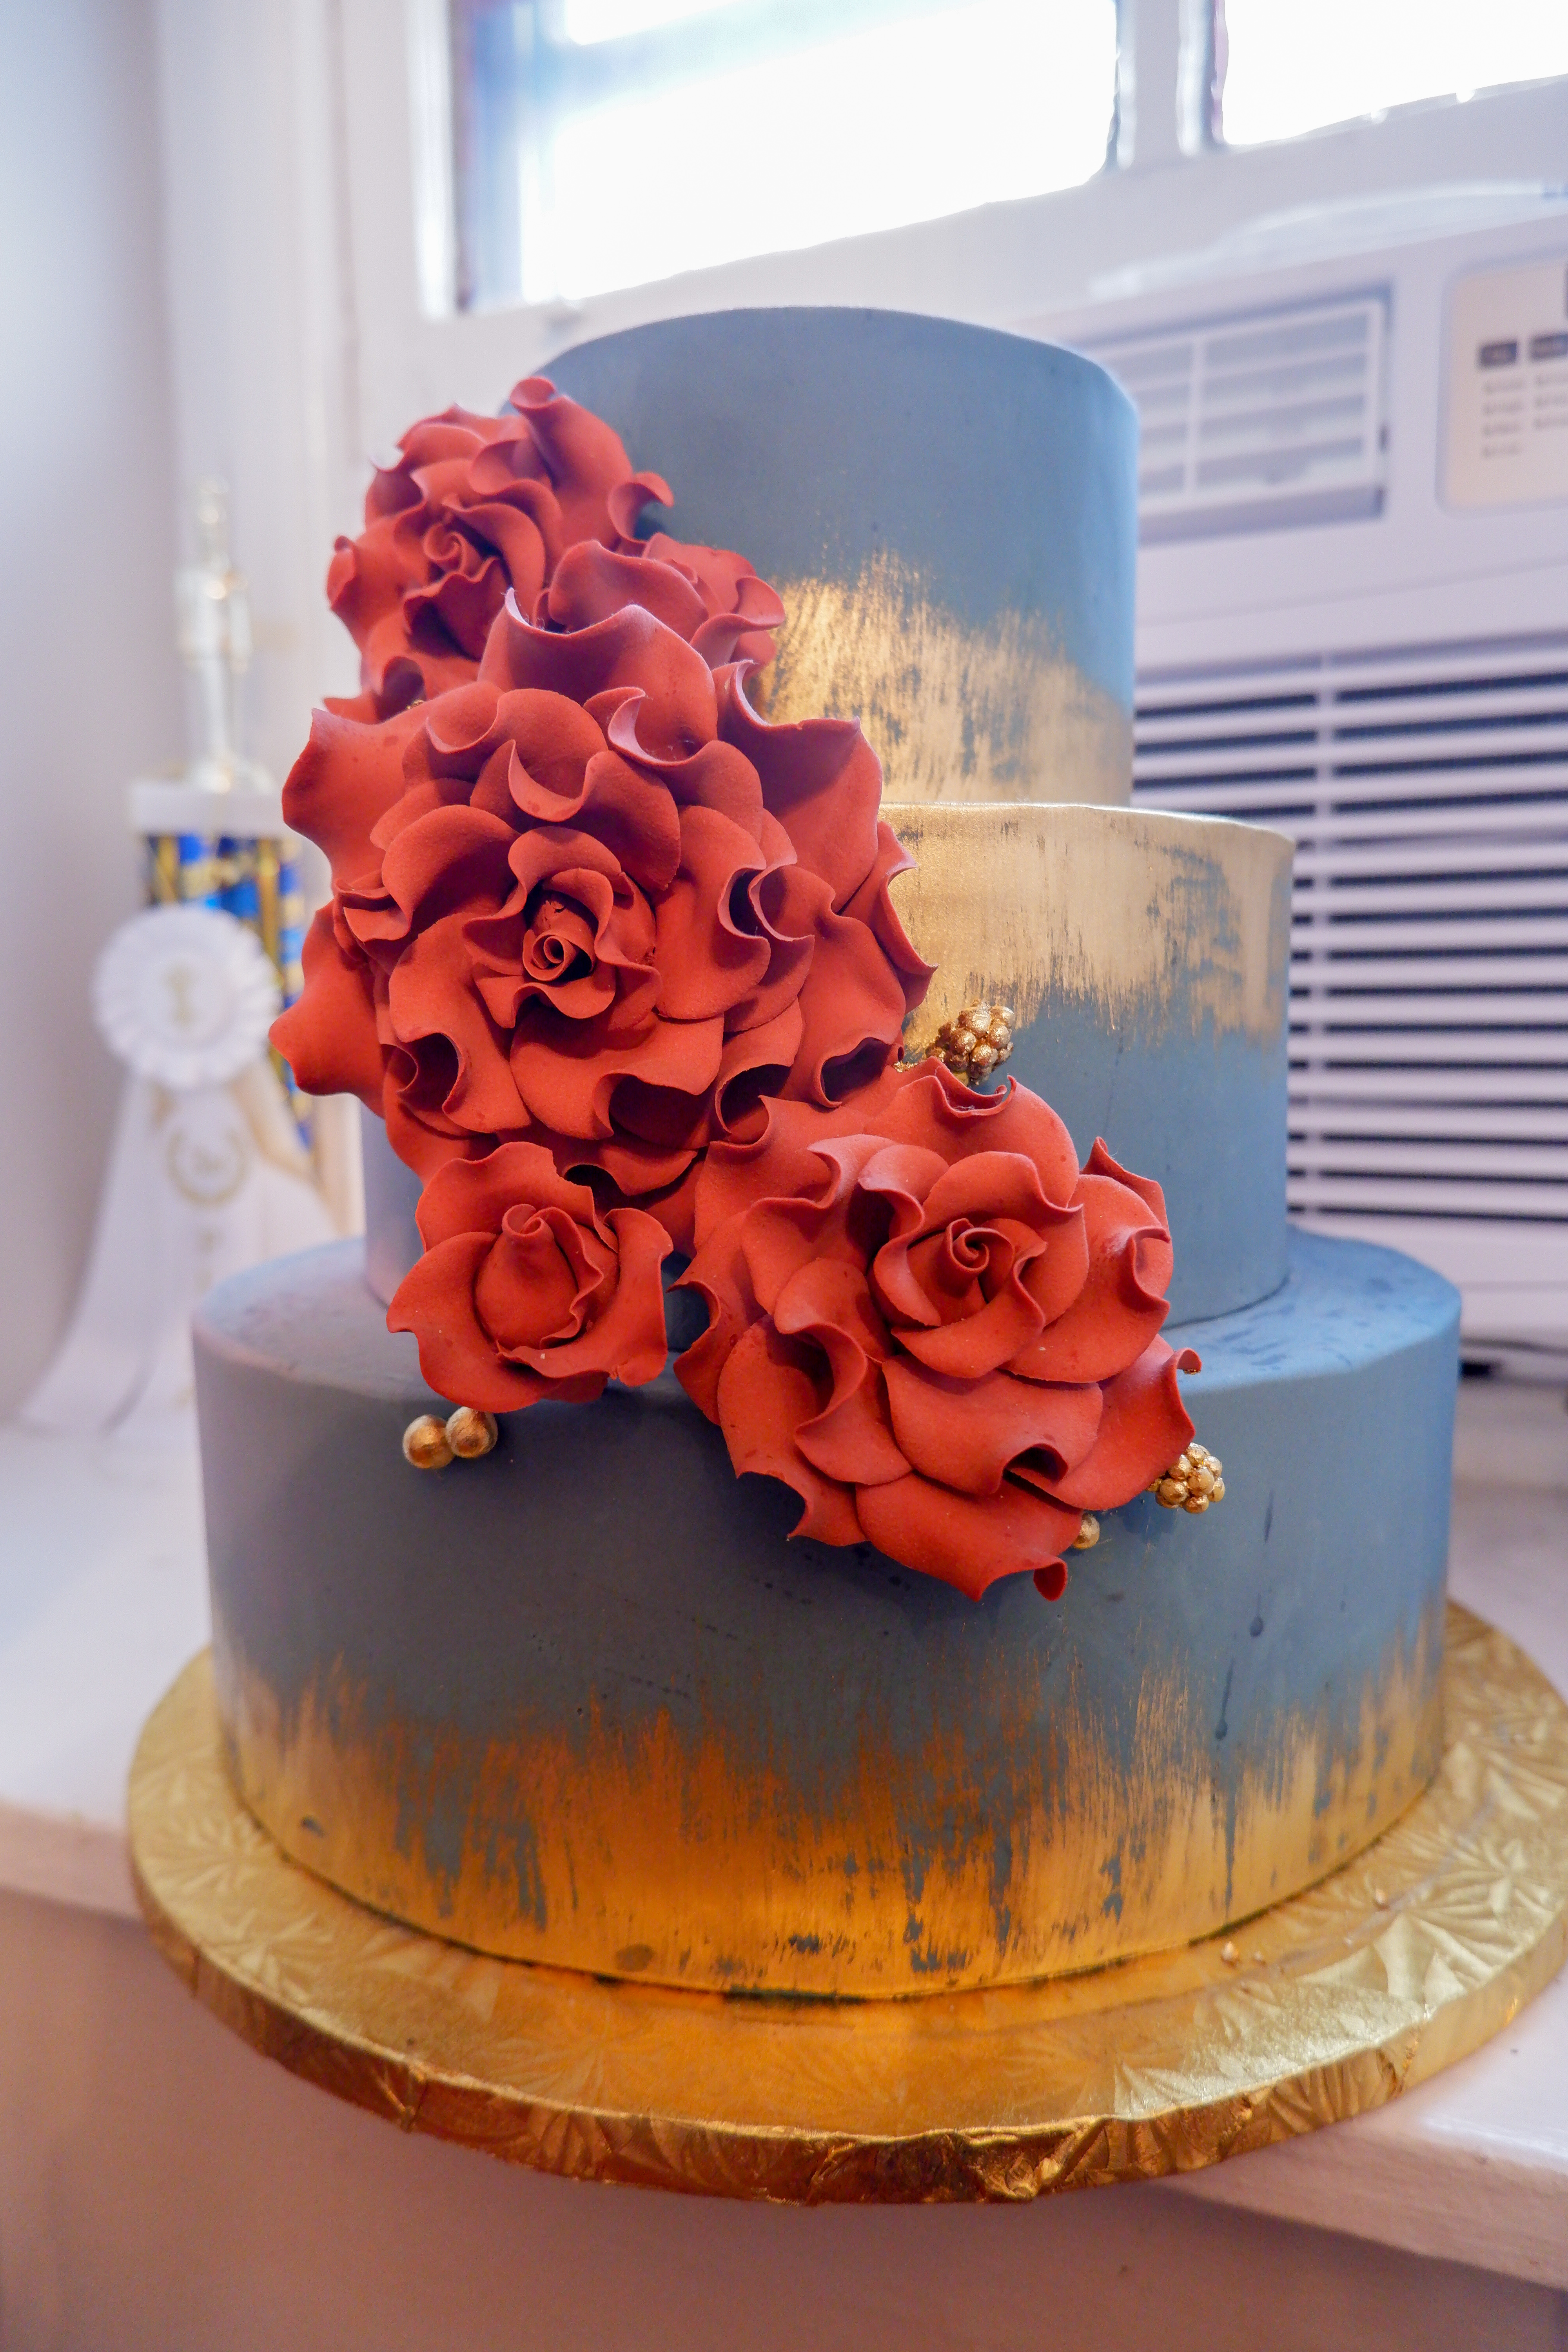 The 10 Best Wedding Cakes in Philadelphia - WeddingWire